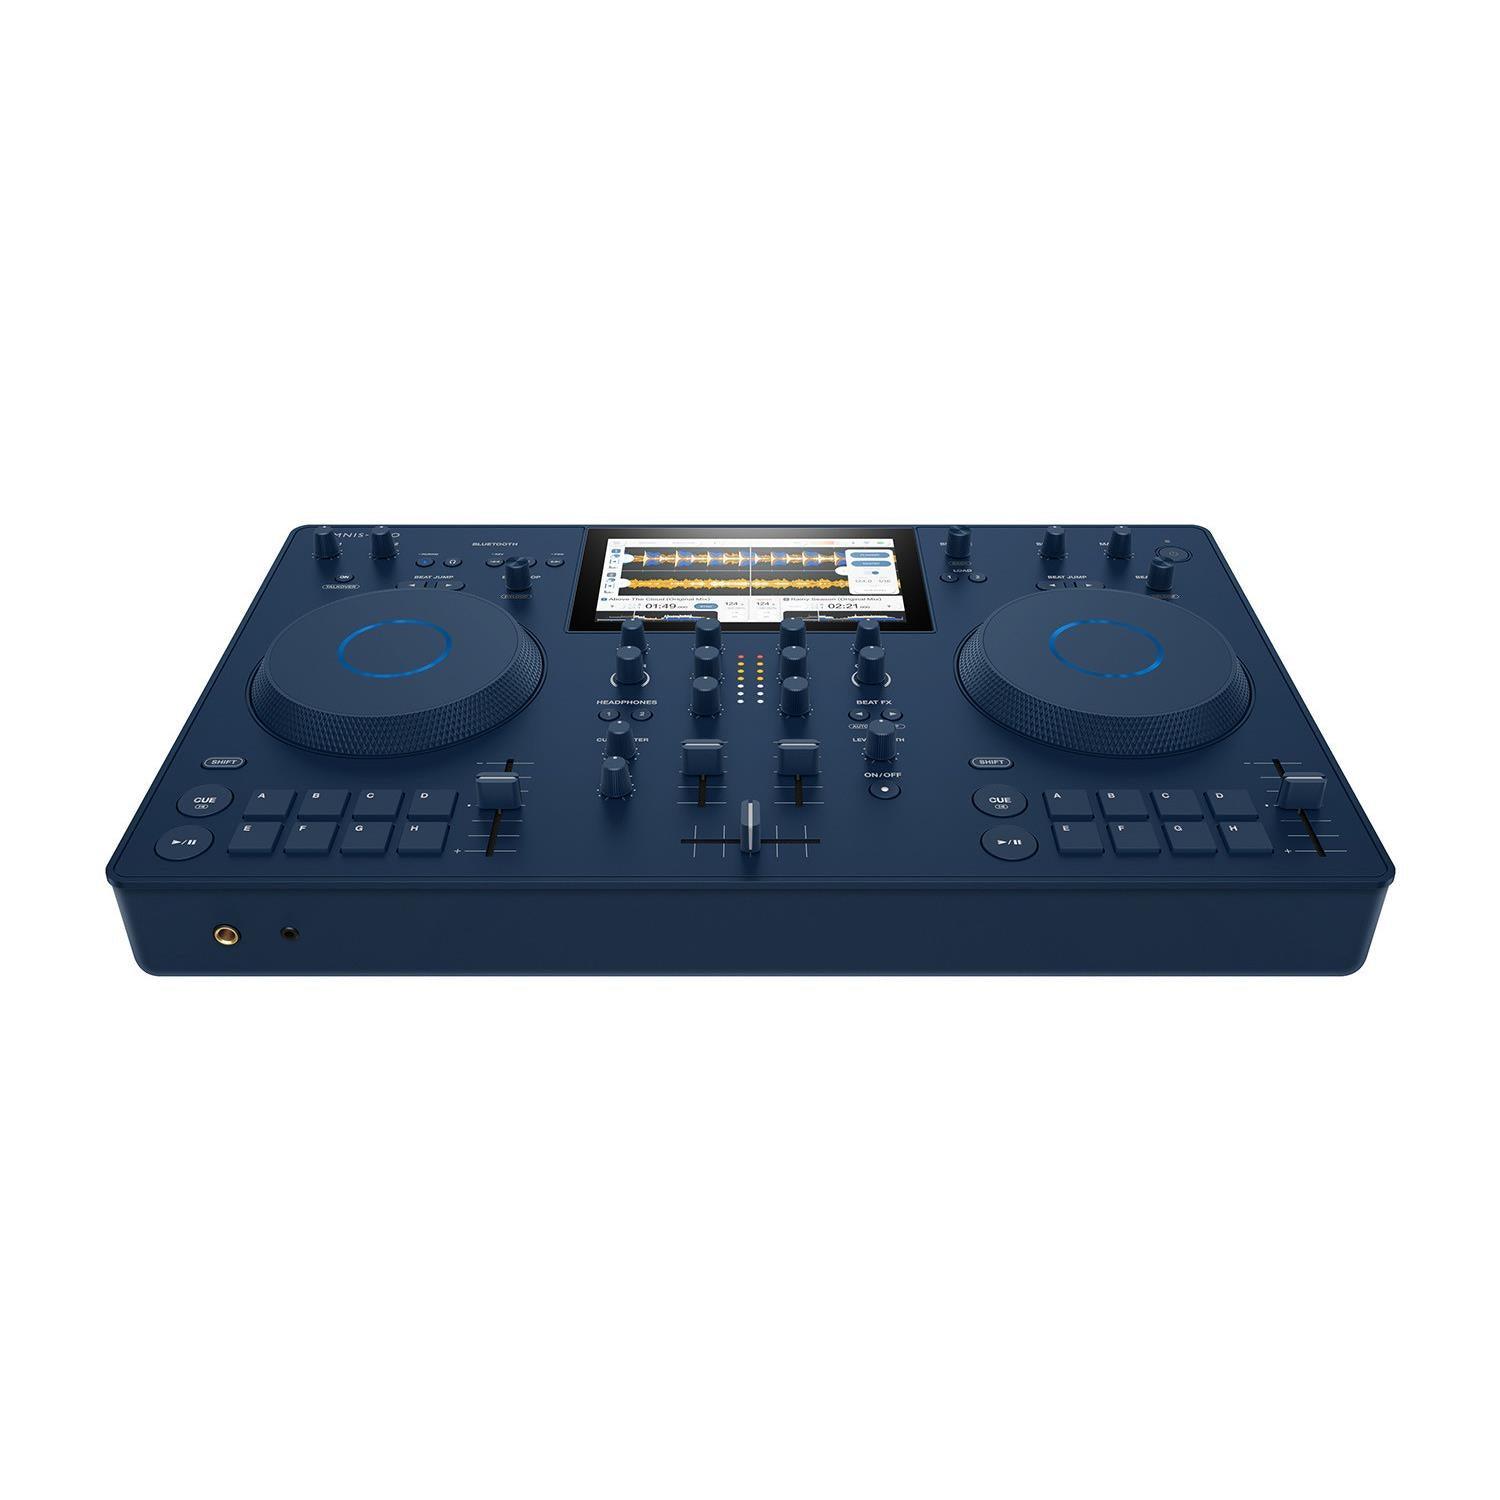 AlphaTheta Omnis-Duo Portable Battery Standalone DJ Controller - DY Pro Audio